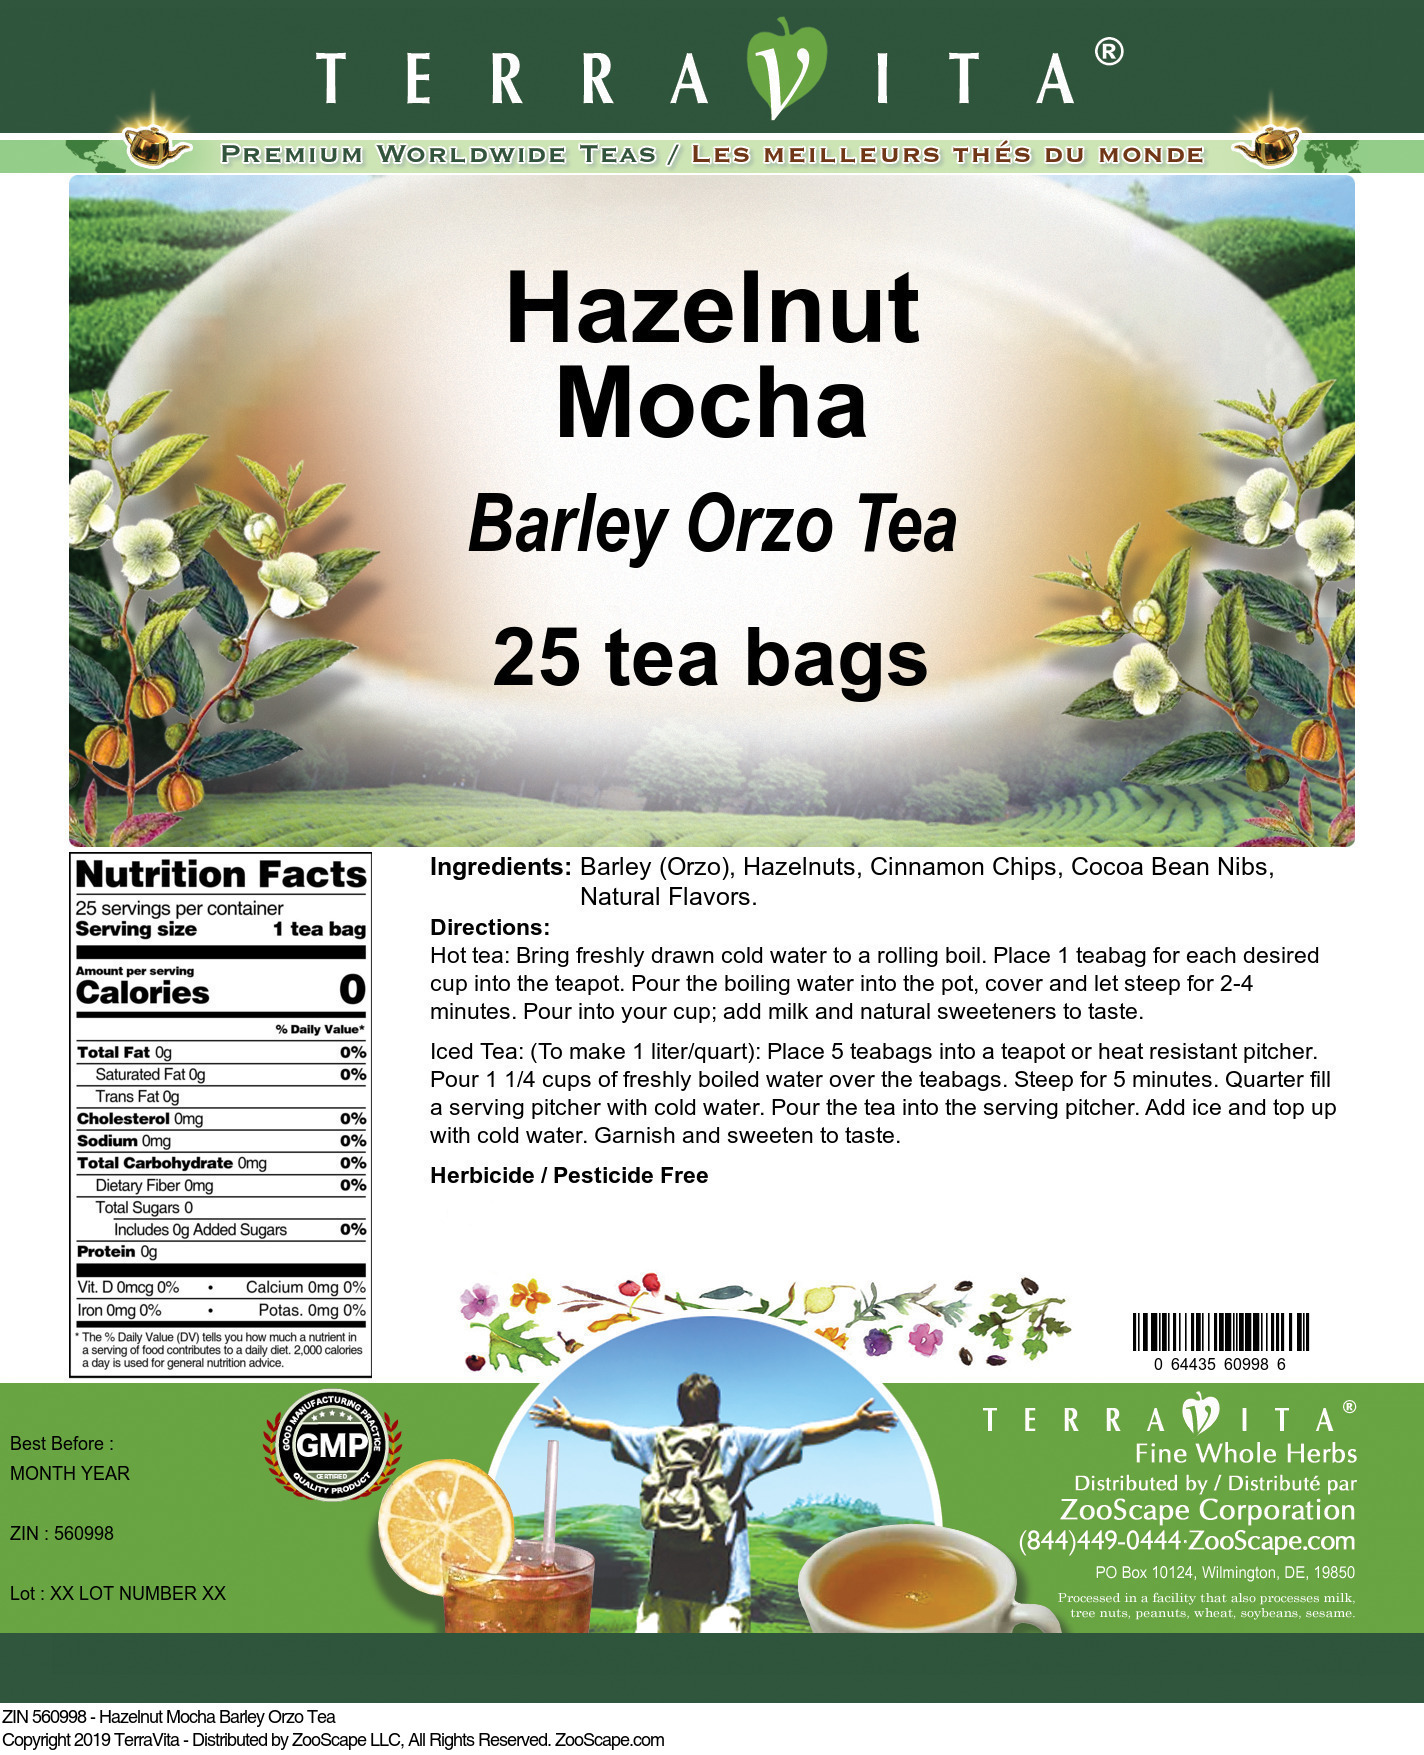 Hazelnut Mocha Barley Orzo Tea - Label